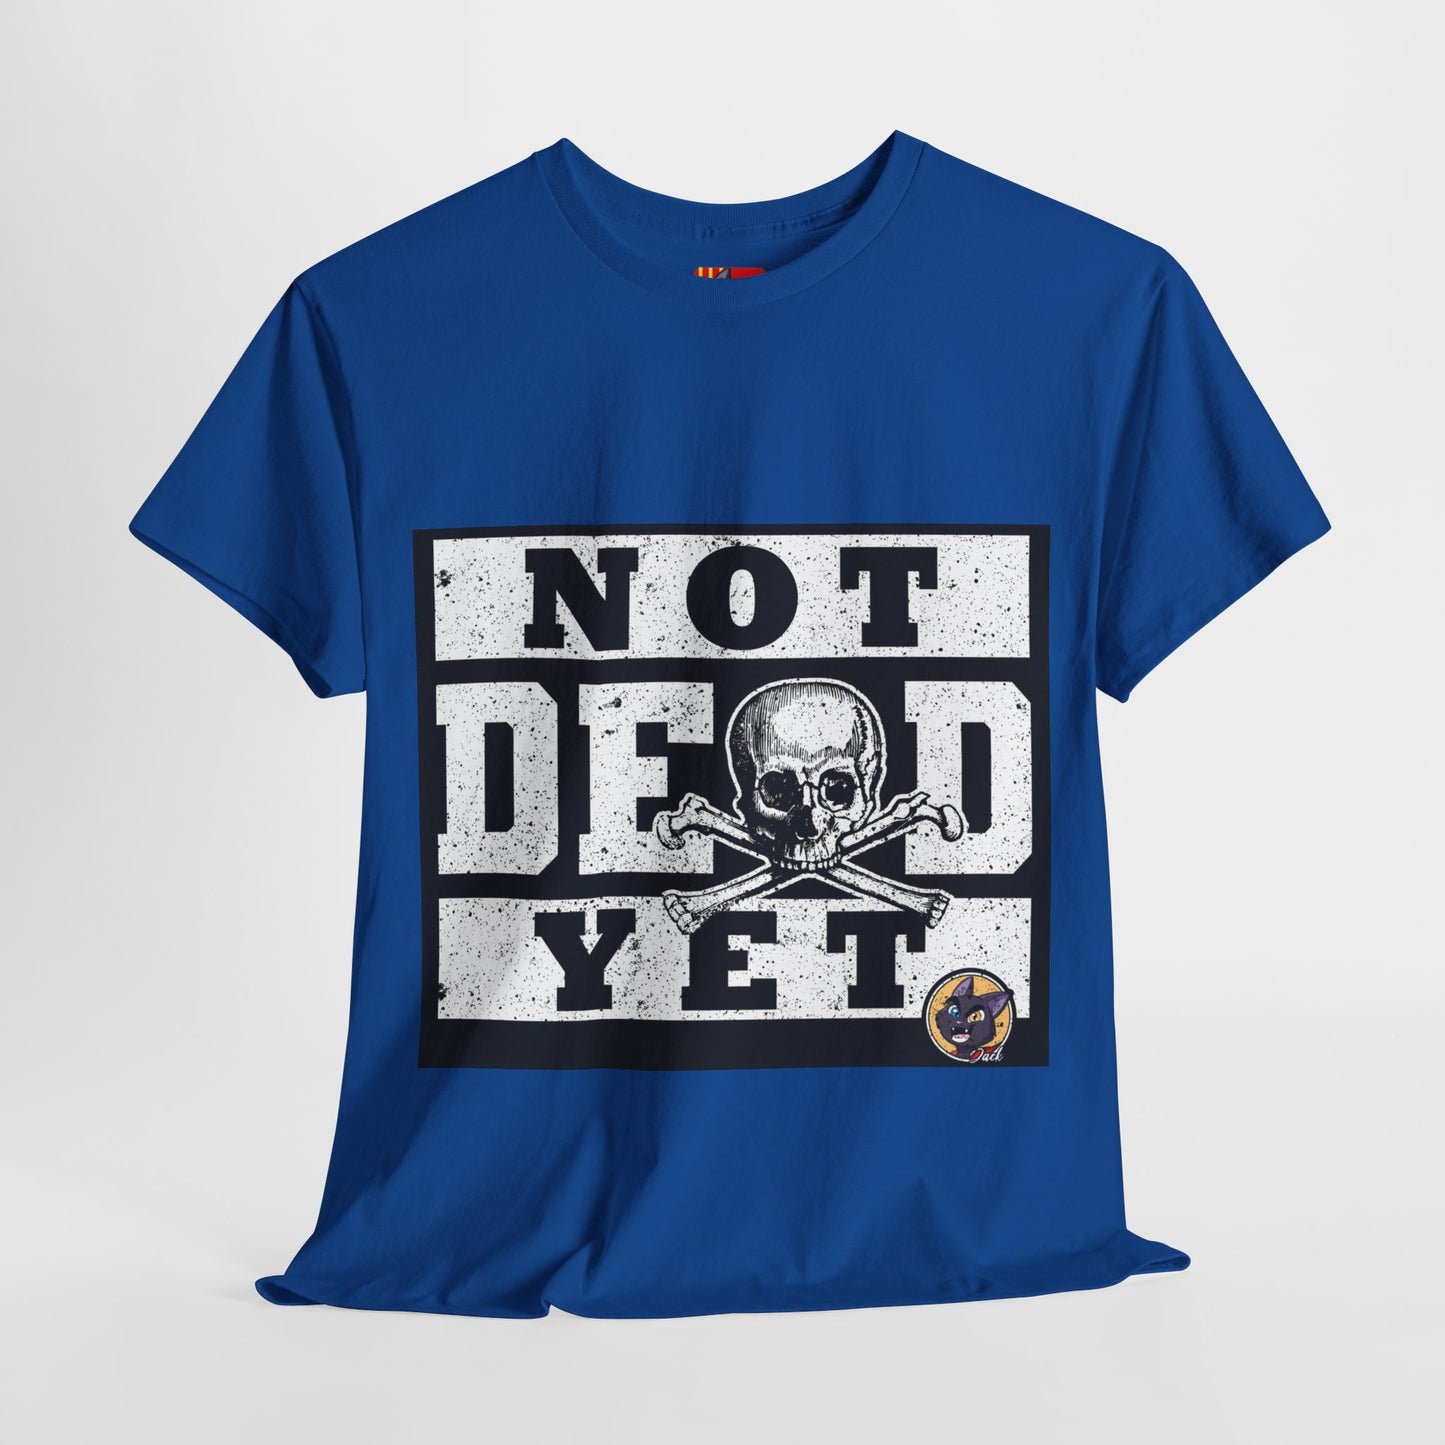 The Critical Thinker T-Shirt: Not dead yet